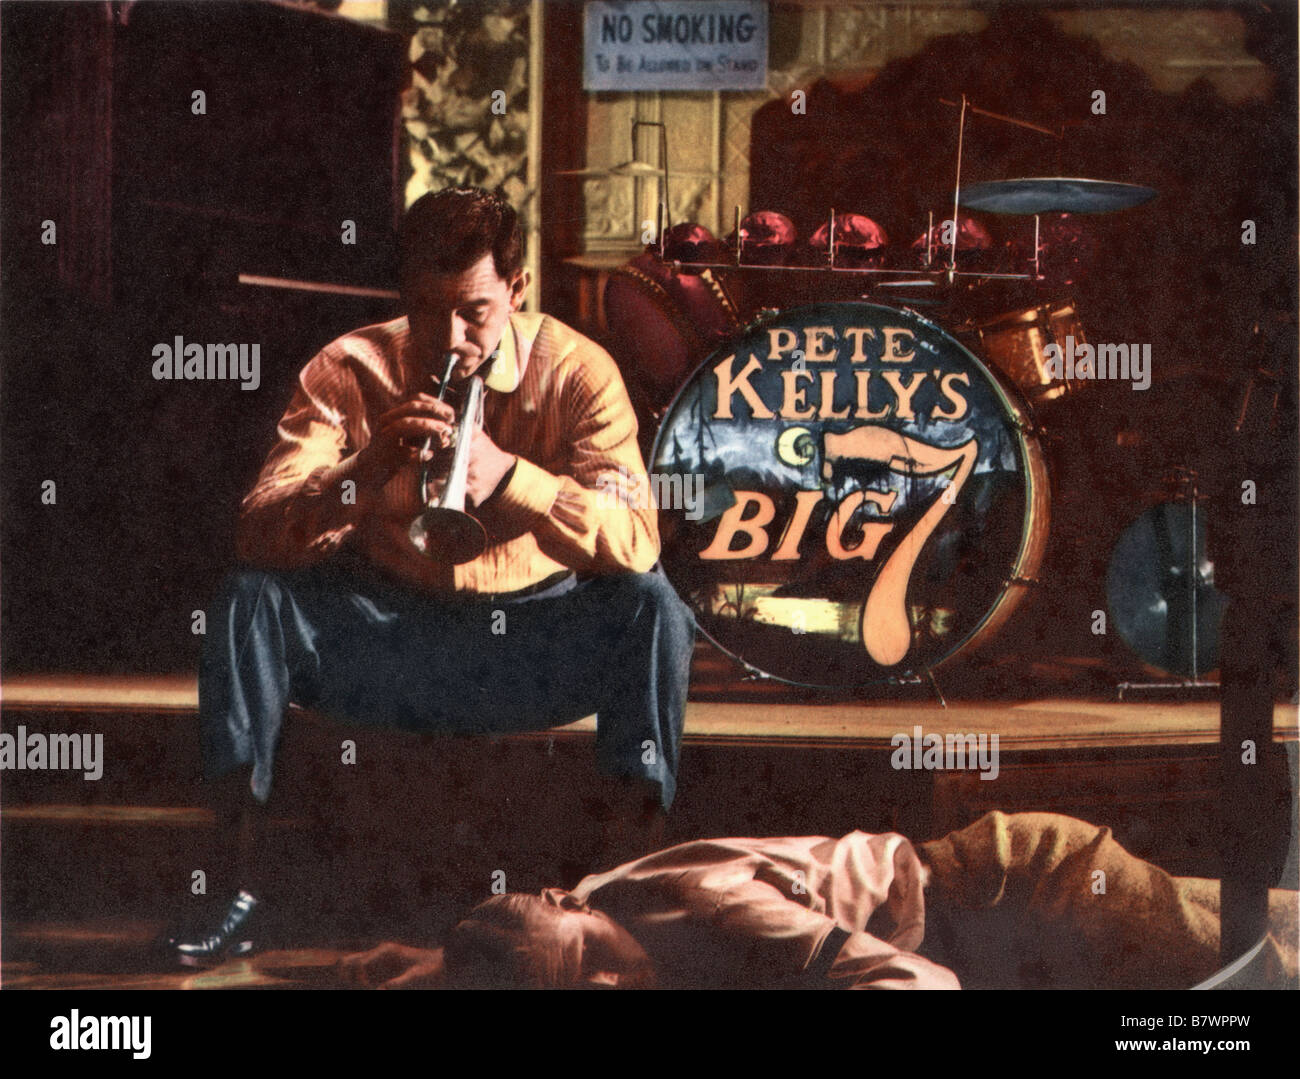 La peau d'un autre Pete Kelly's Blues Año: 1955 EE.UU. Jack Webb Director: Jack Webb Foto de stock